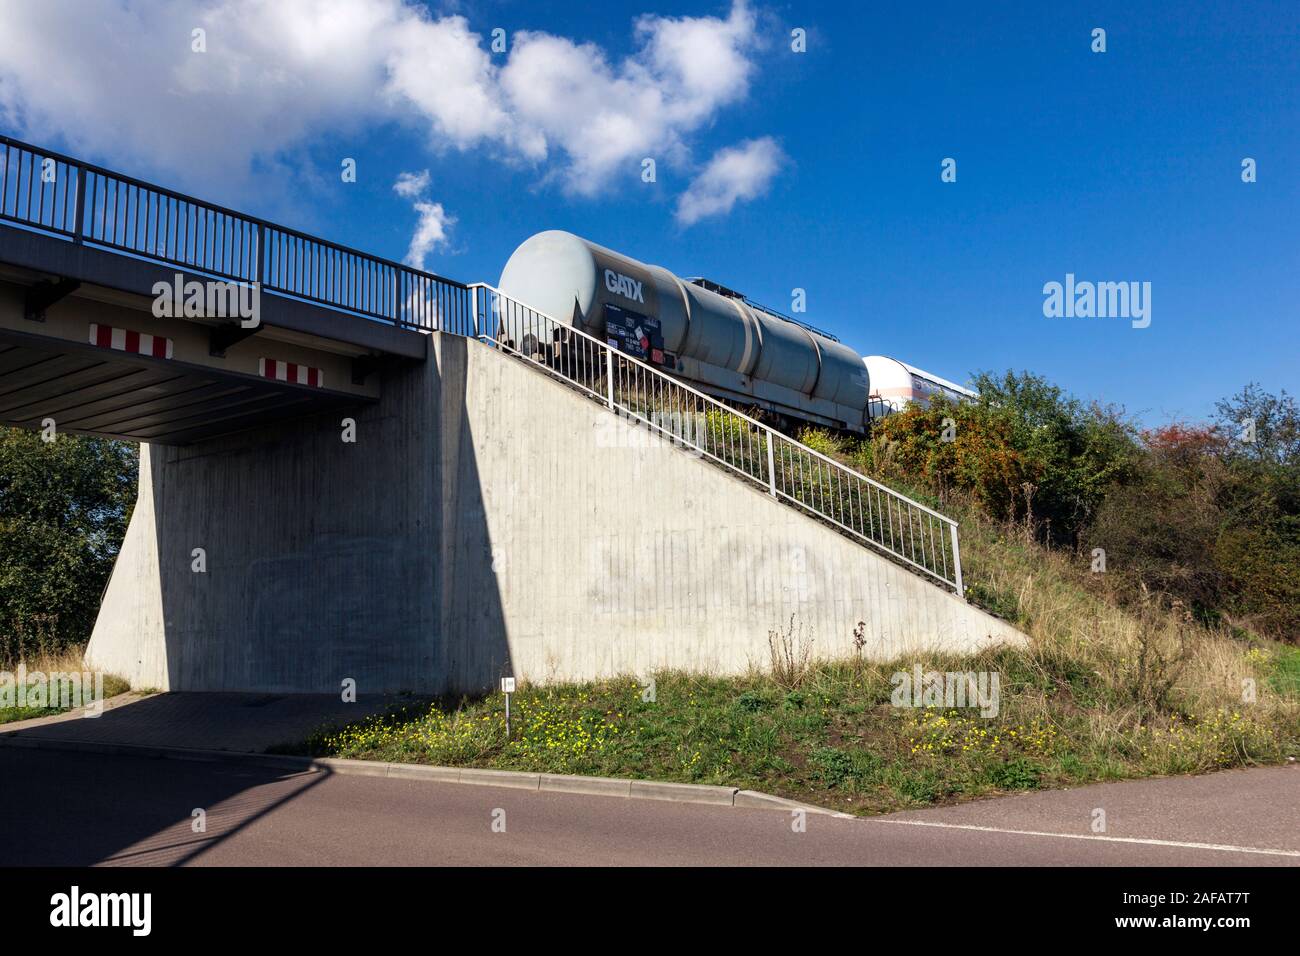 Tank wagons on a railway embankment Stock Photo